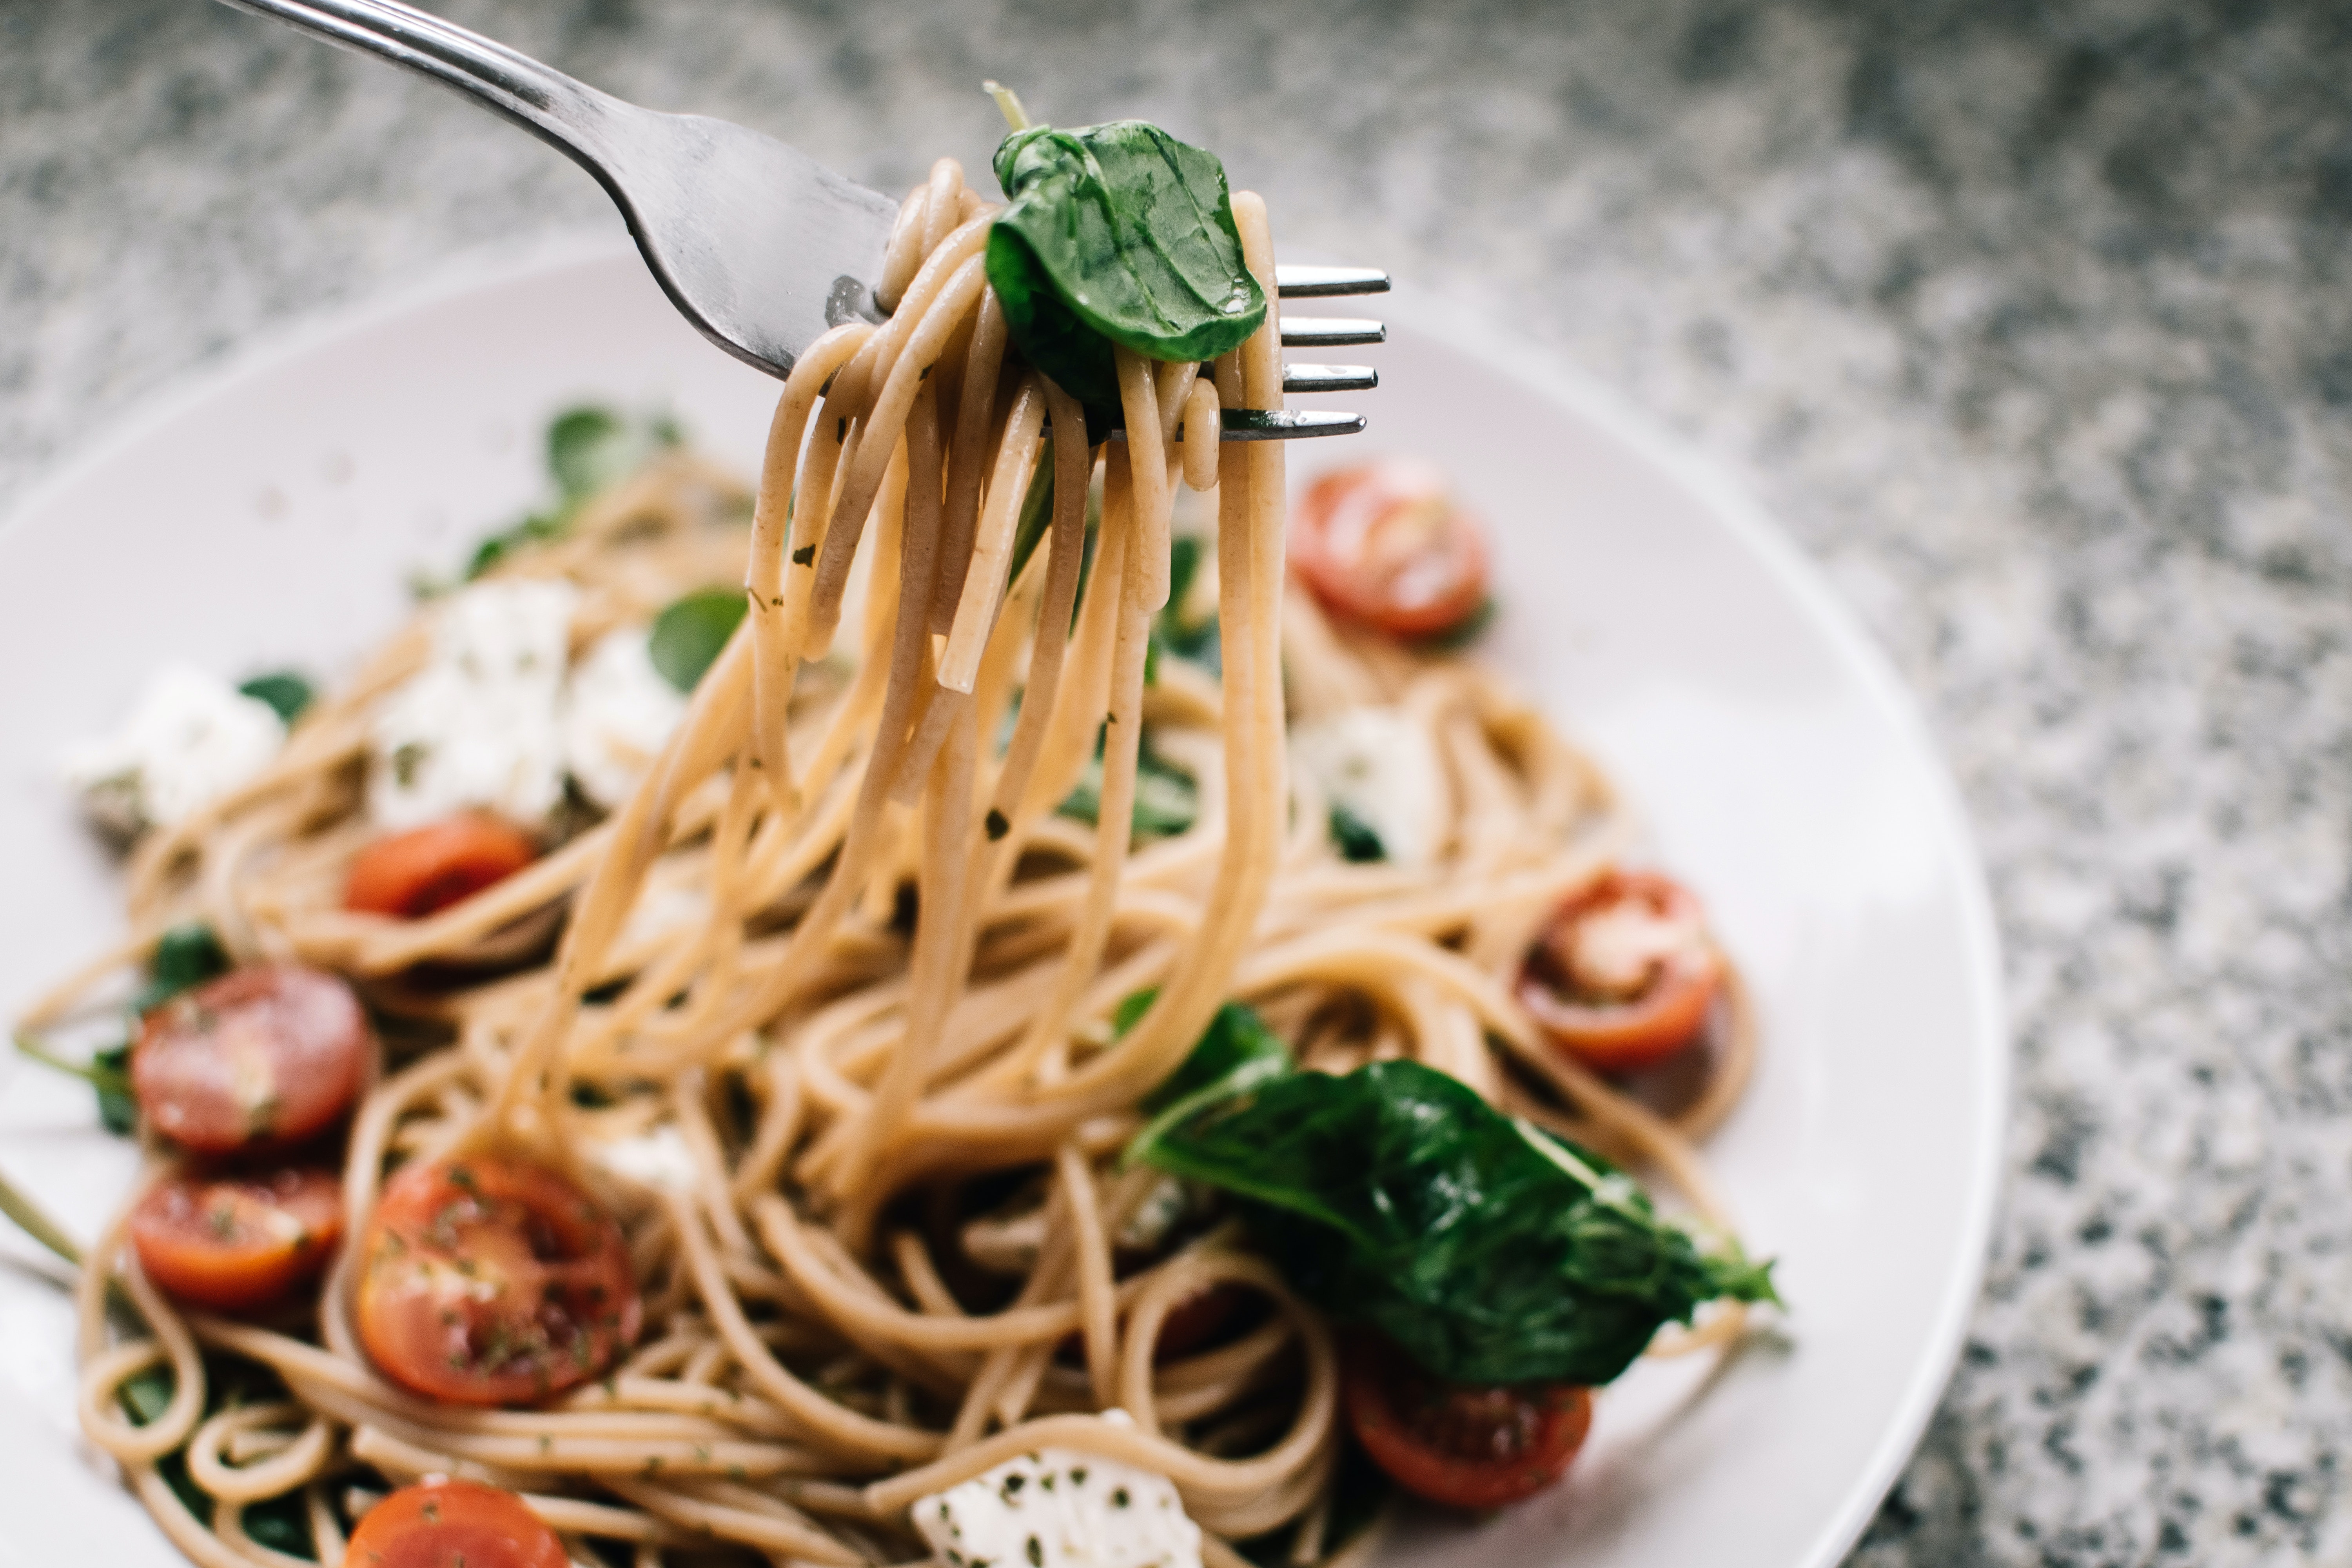 https://www.foodkonjac.com/news/wich-pasta-is-best-for-weight-loss/